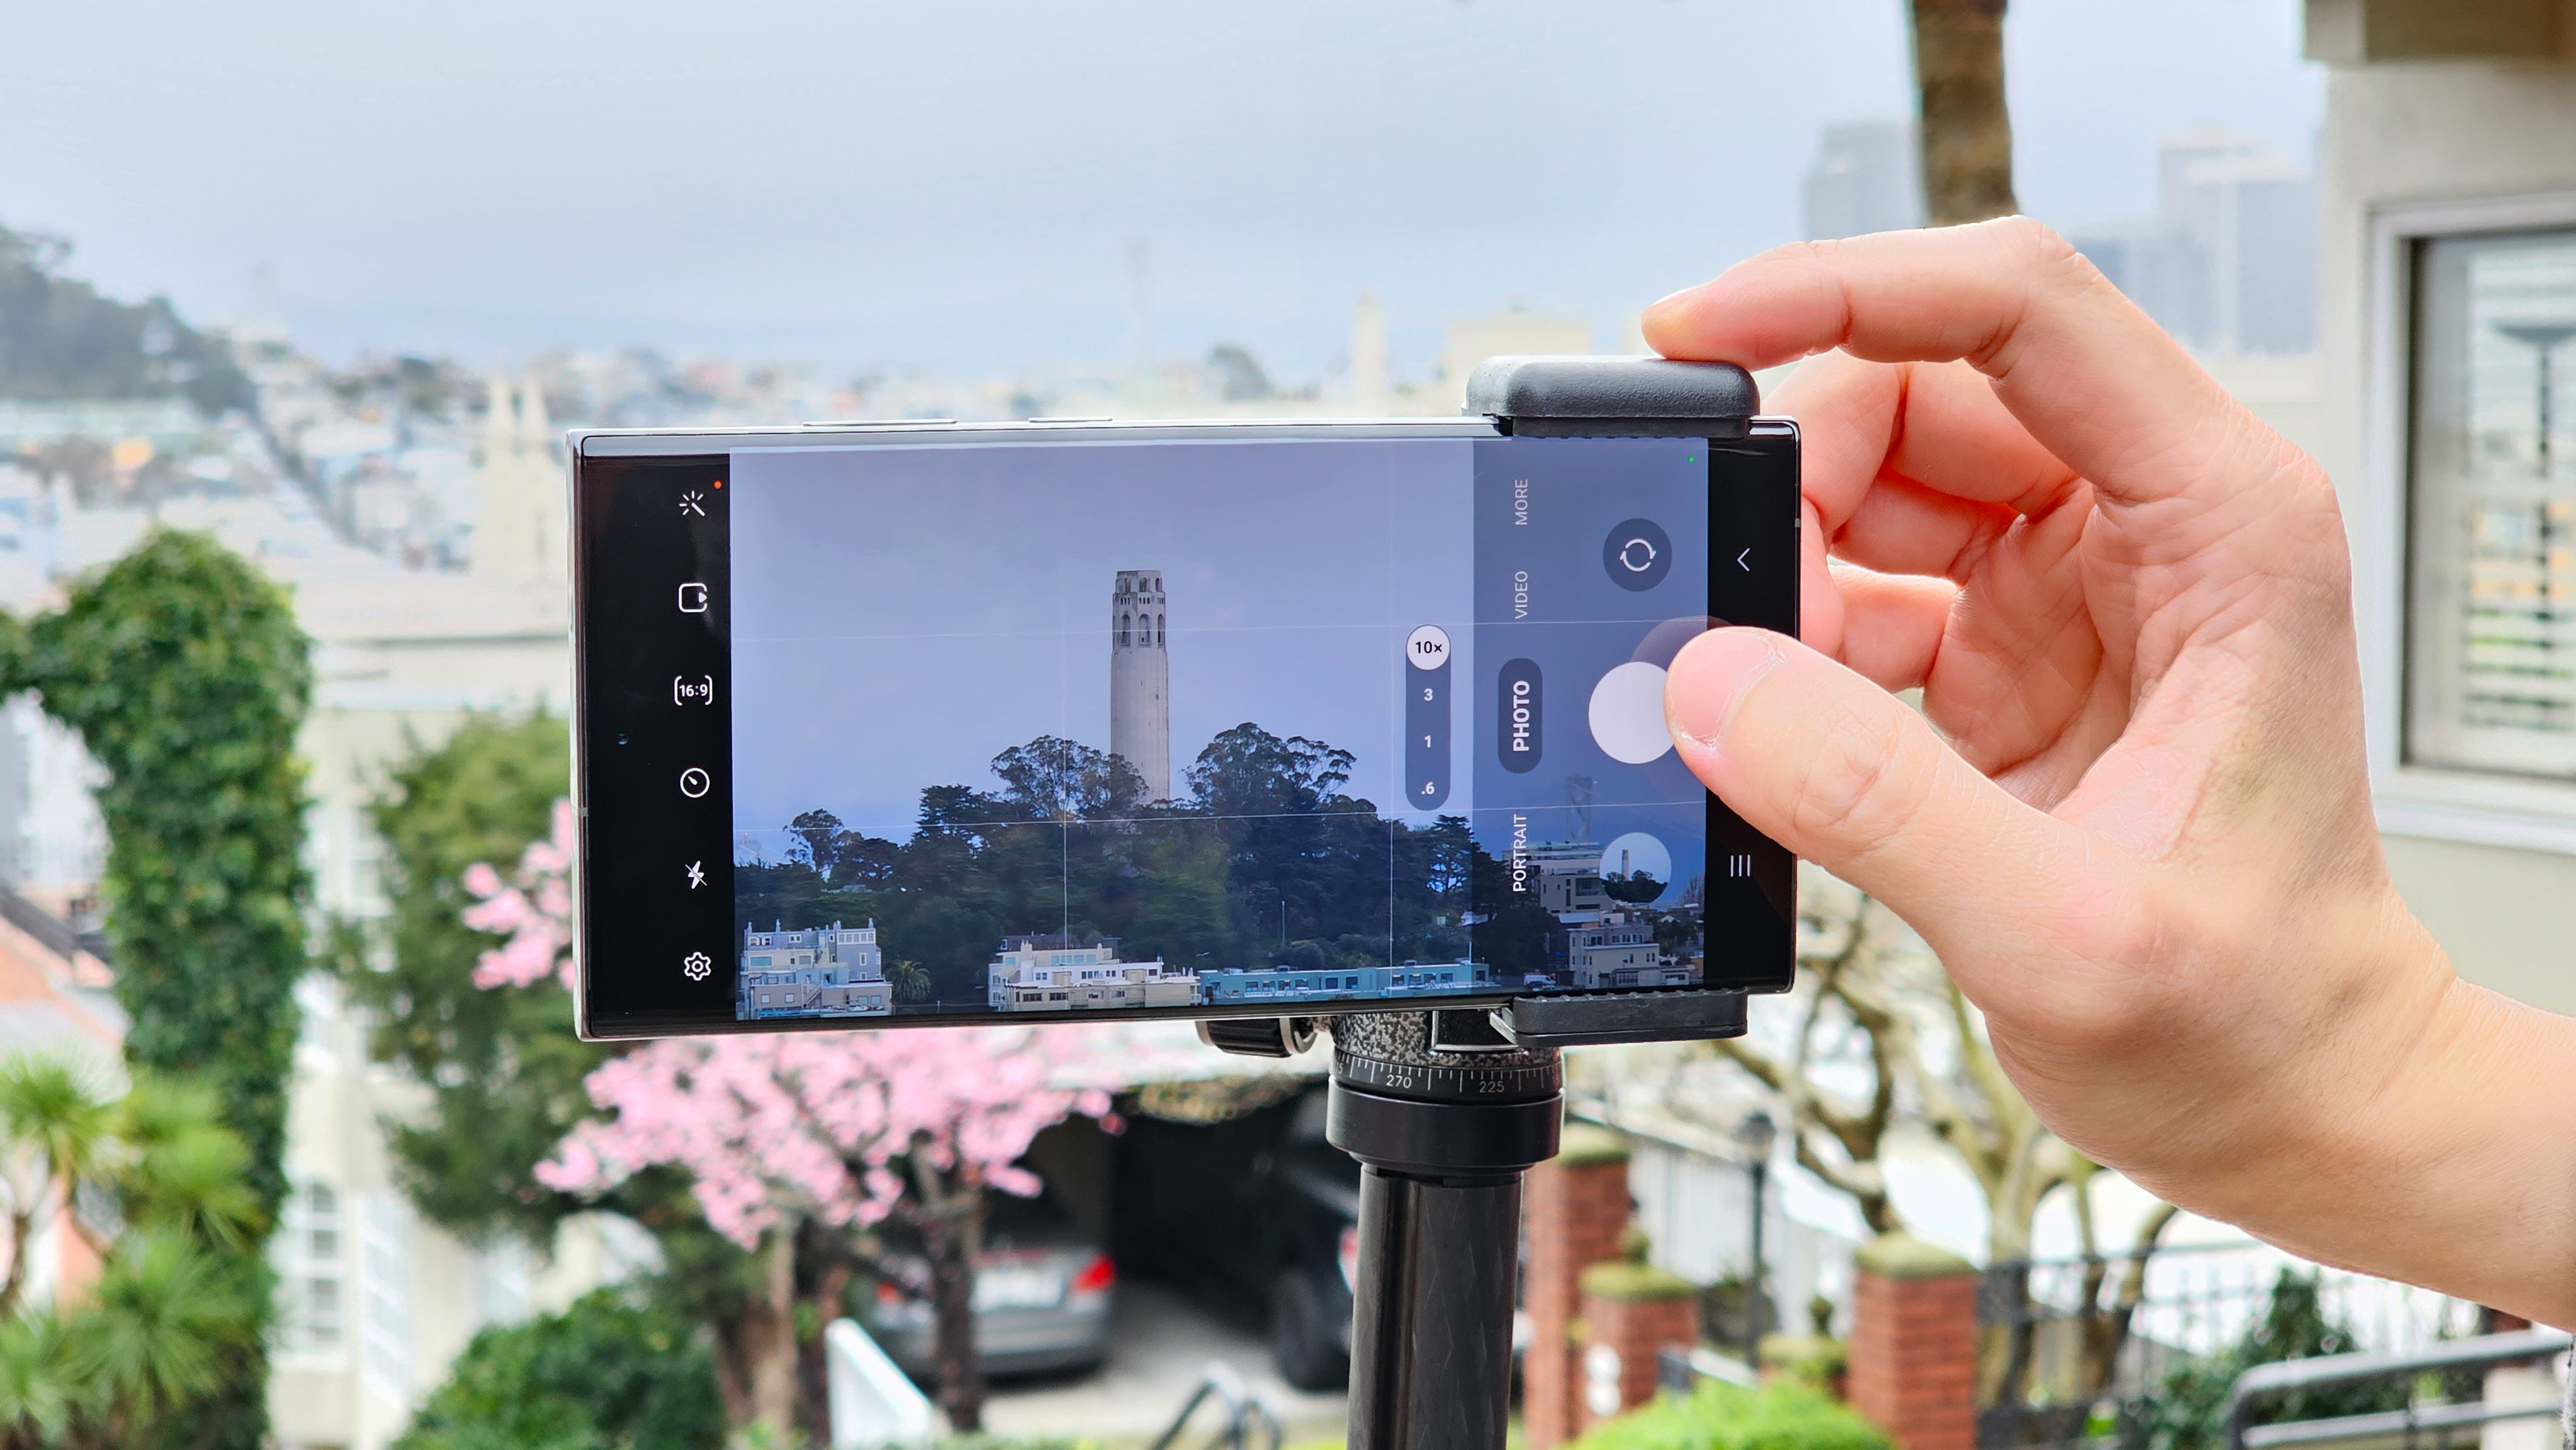 Samsung Galaxy S23 FE upgrades the camera to 50MP, uses last